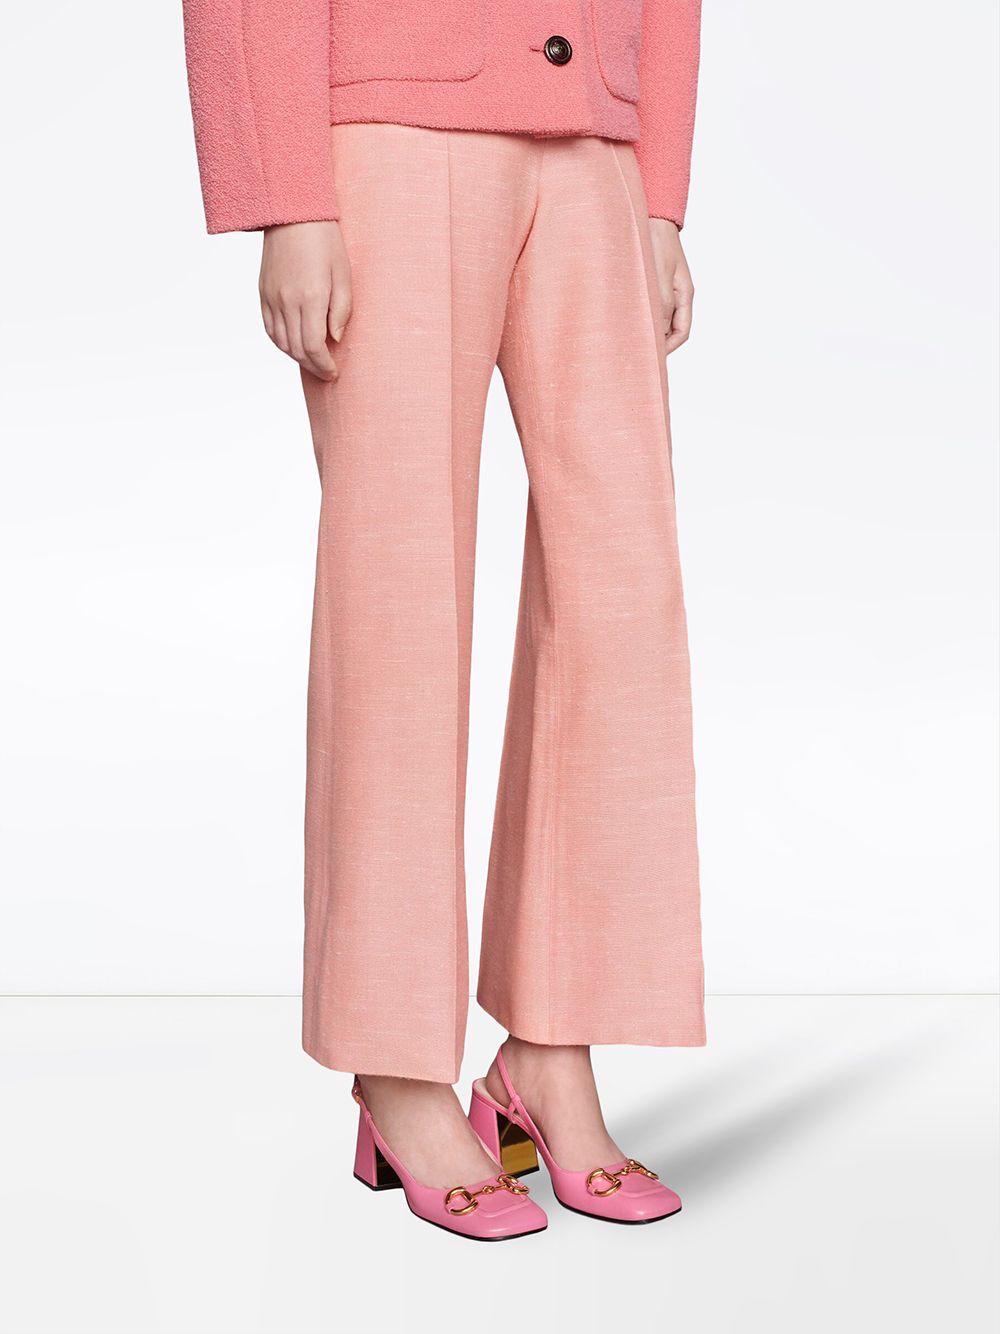 Gucci Leather Horsebit Mid-heel Slingback Pumps in Pink | Lyst